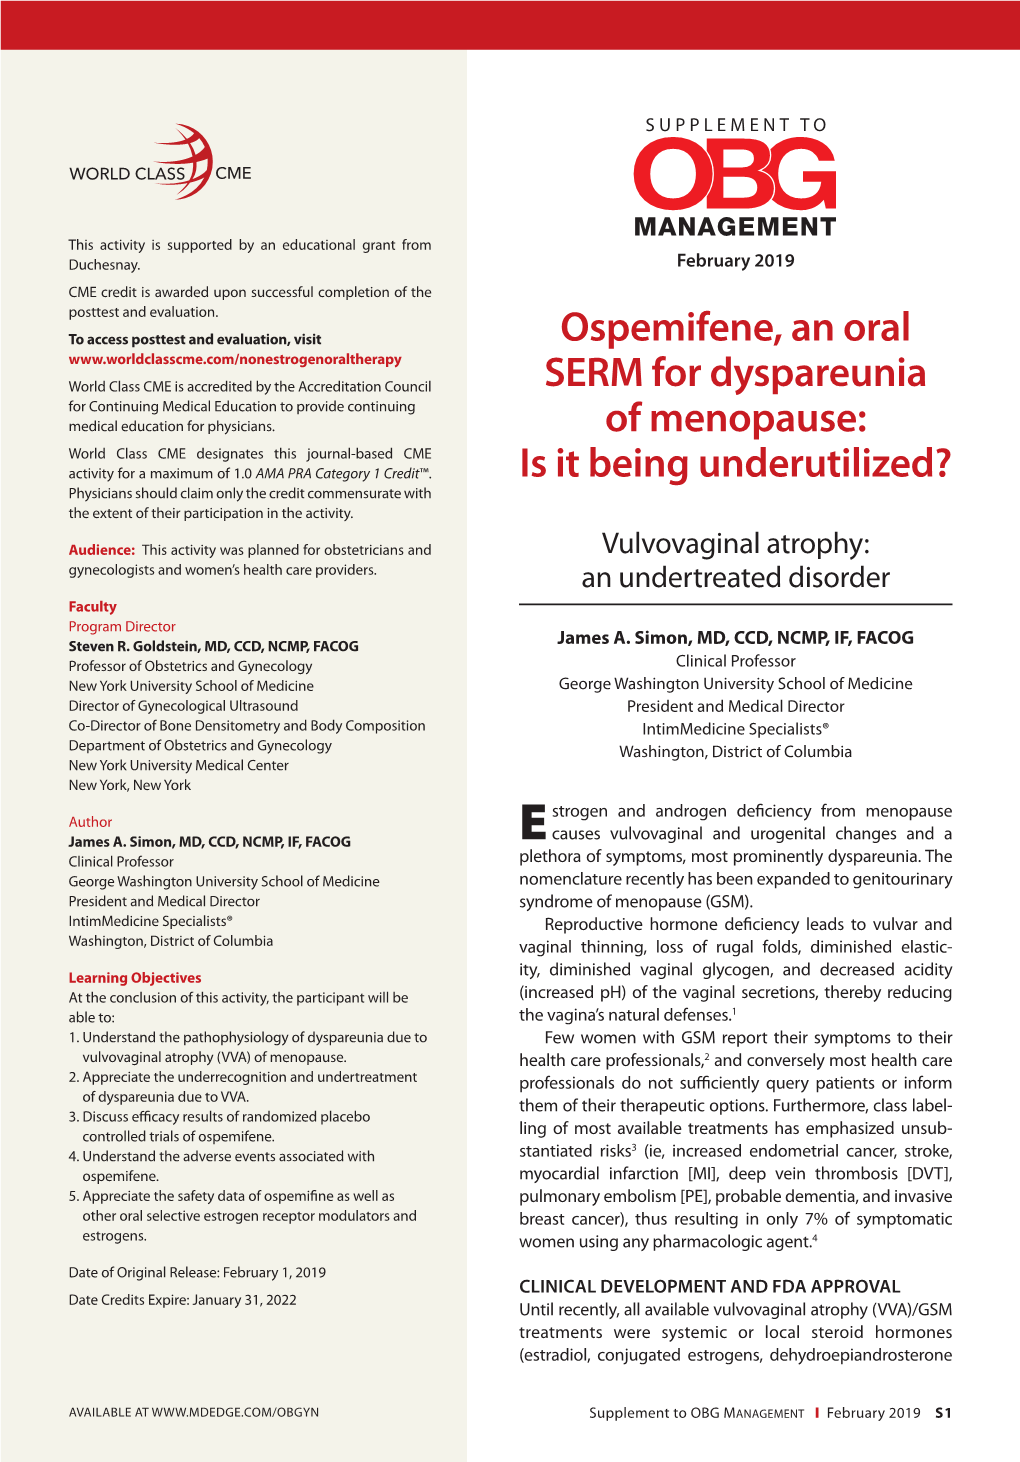 Ospemifene, an Oral SERM for Dyspareunia of Menopause: Is It